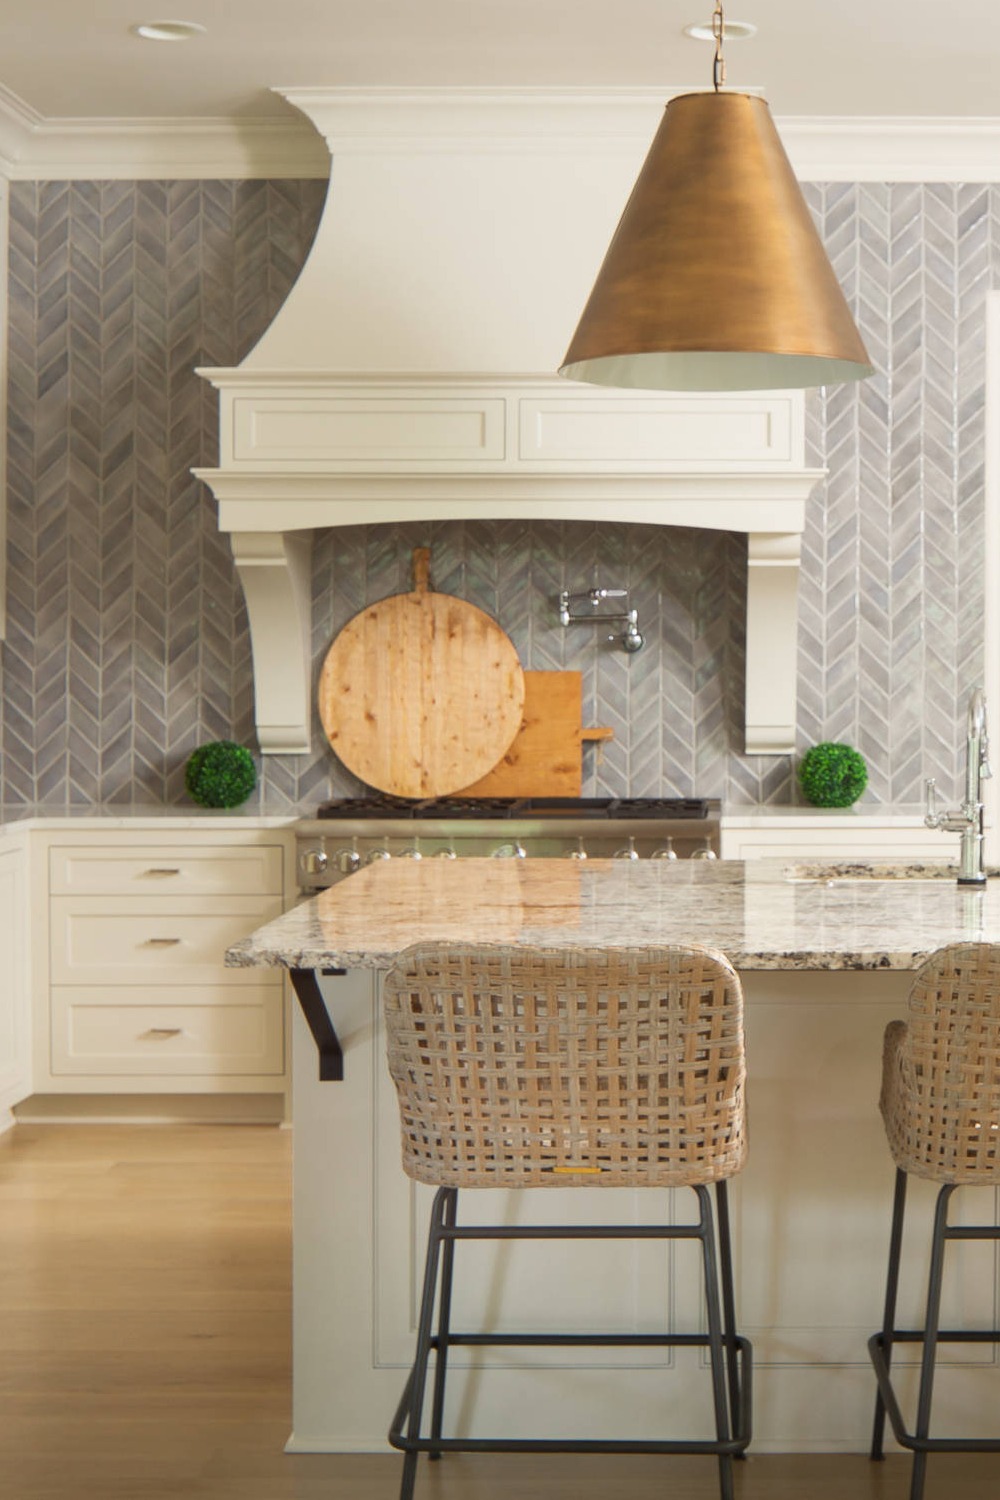 Gray Backsplash Tiles Kitchen With White Cabinets Herringbone Design Space Pattern Range Sink Modern Countertop